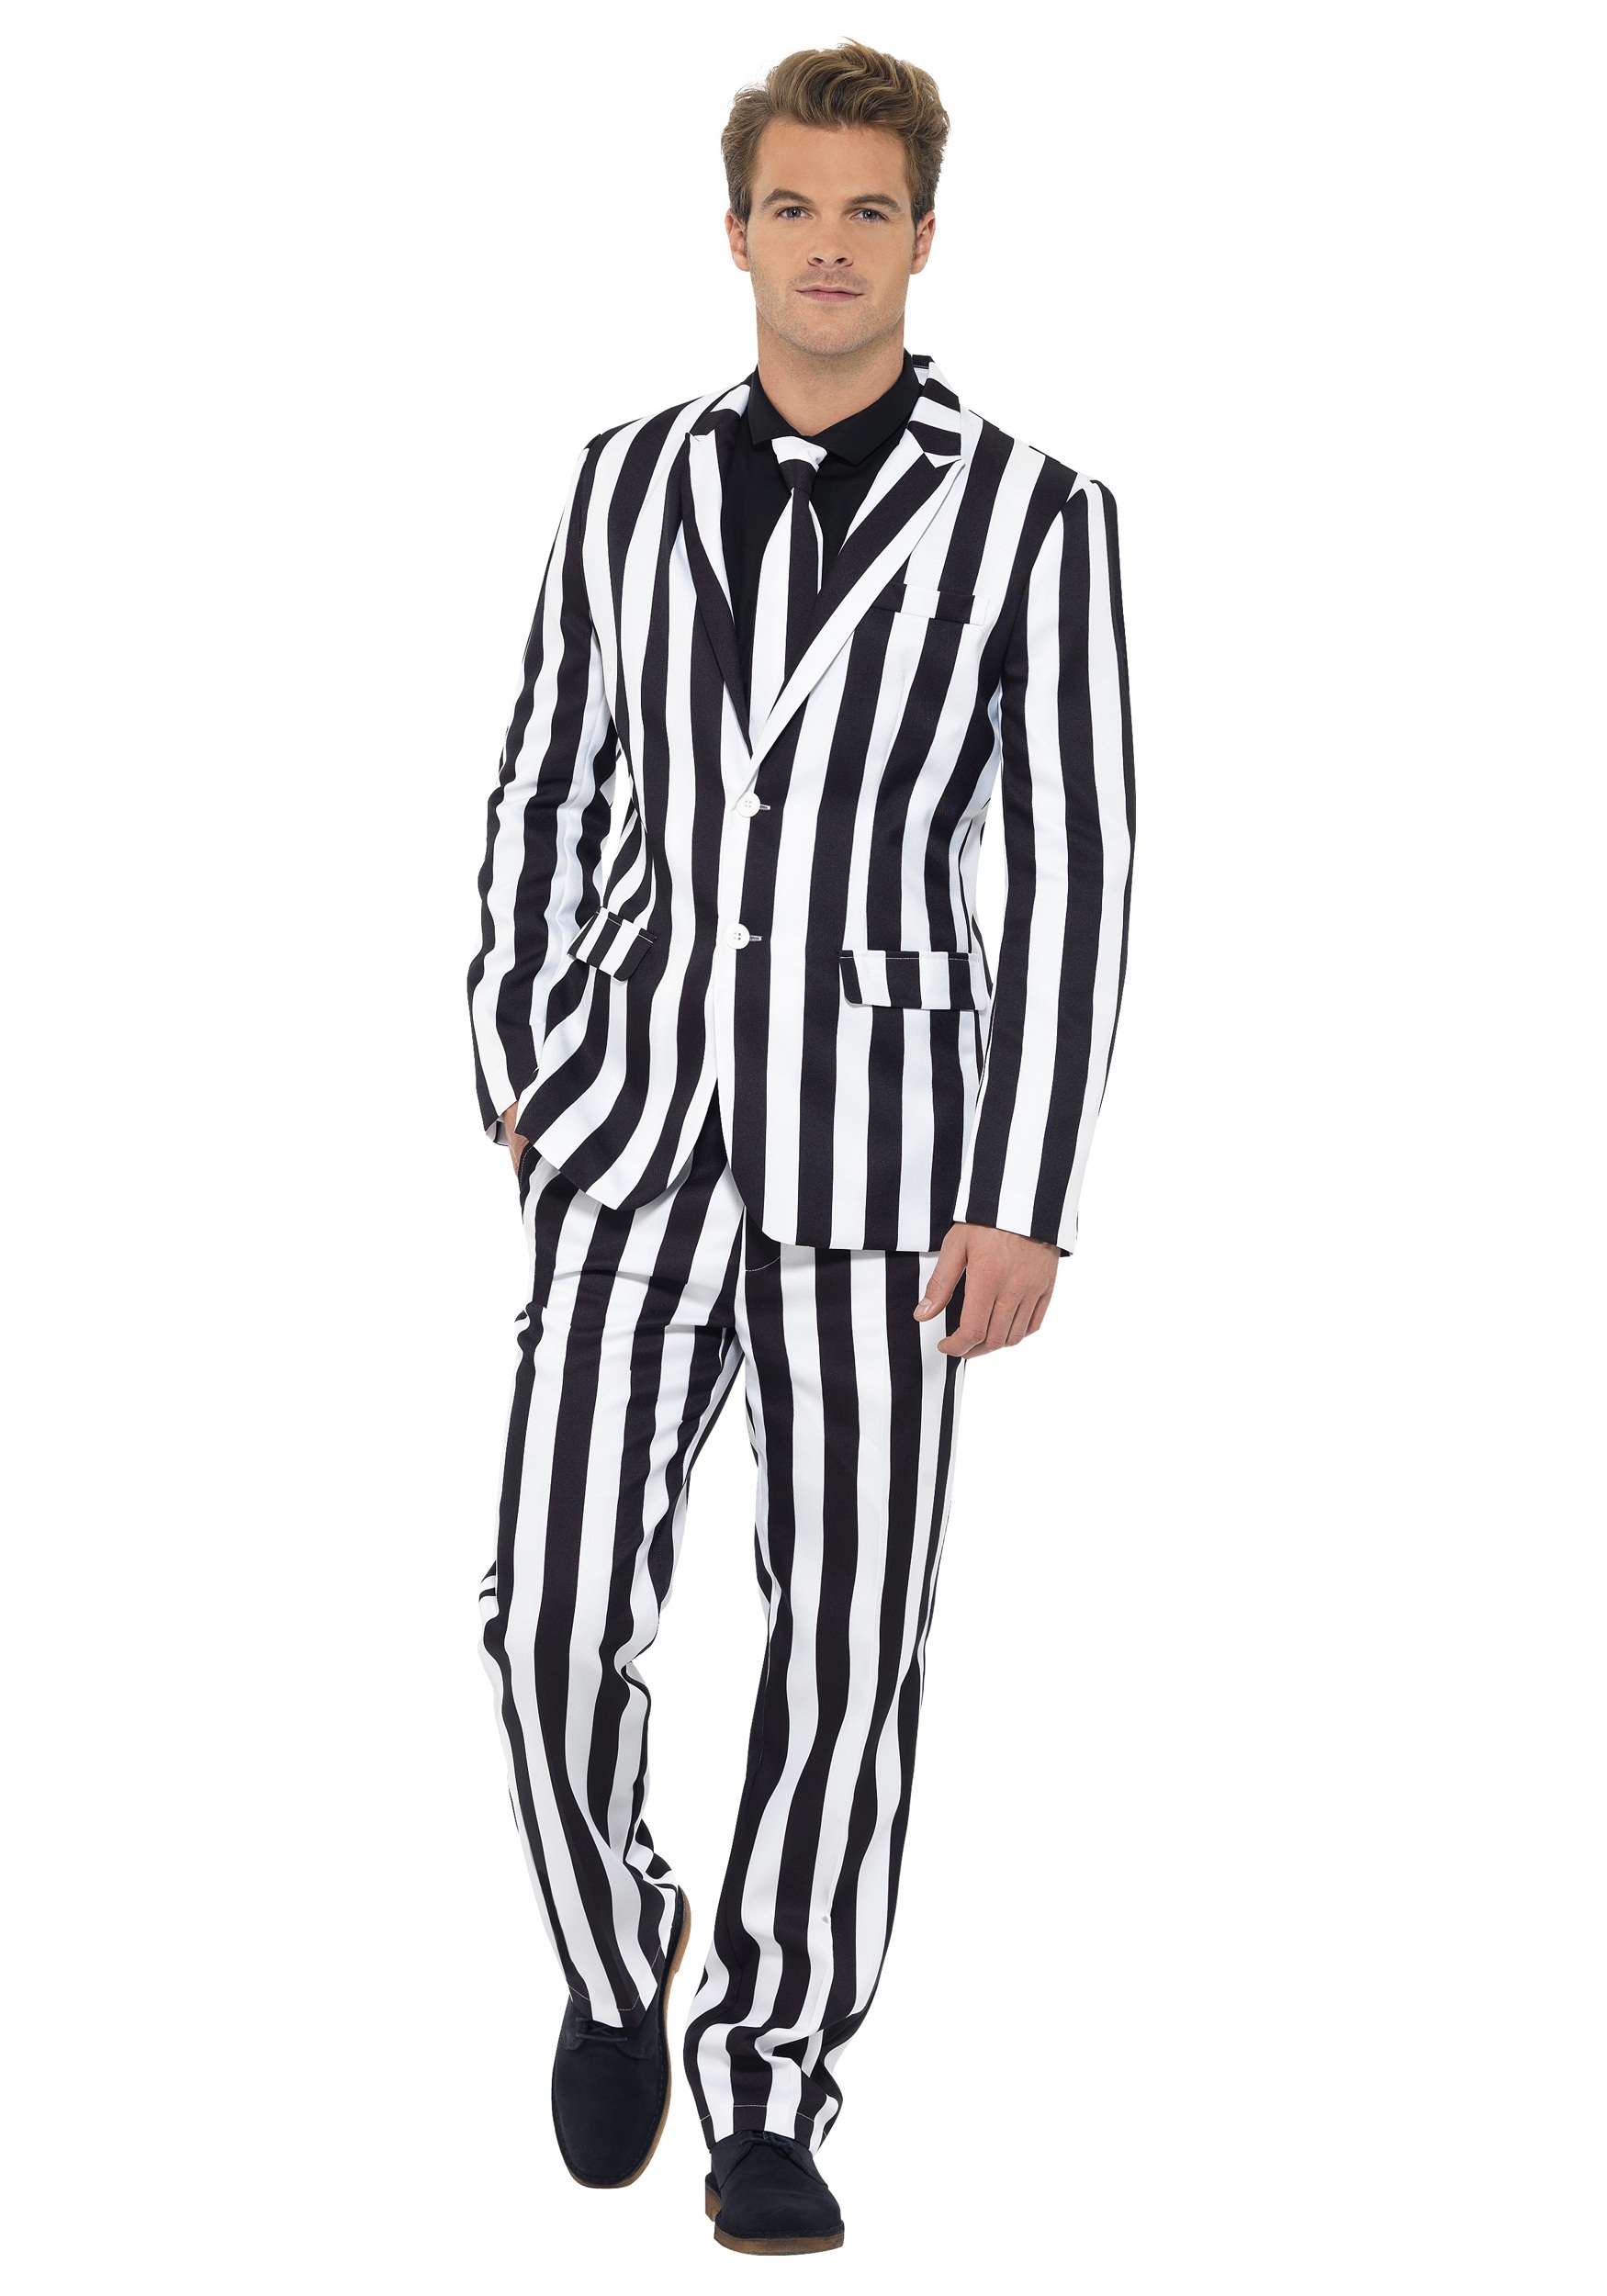 Image of Men's Humbug Striped Suit ID SM43536-XL